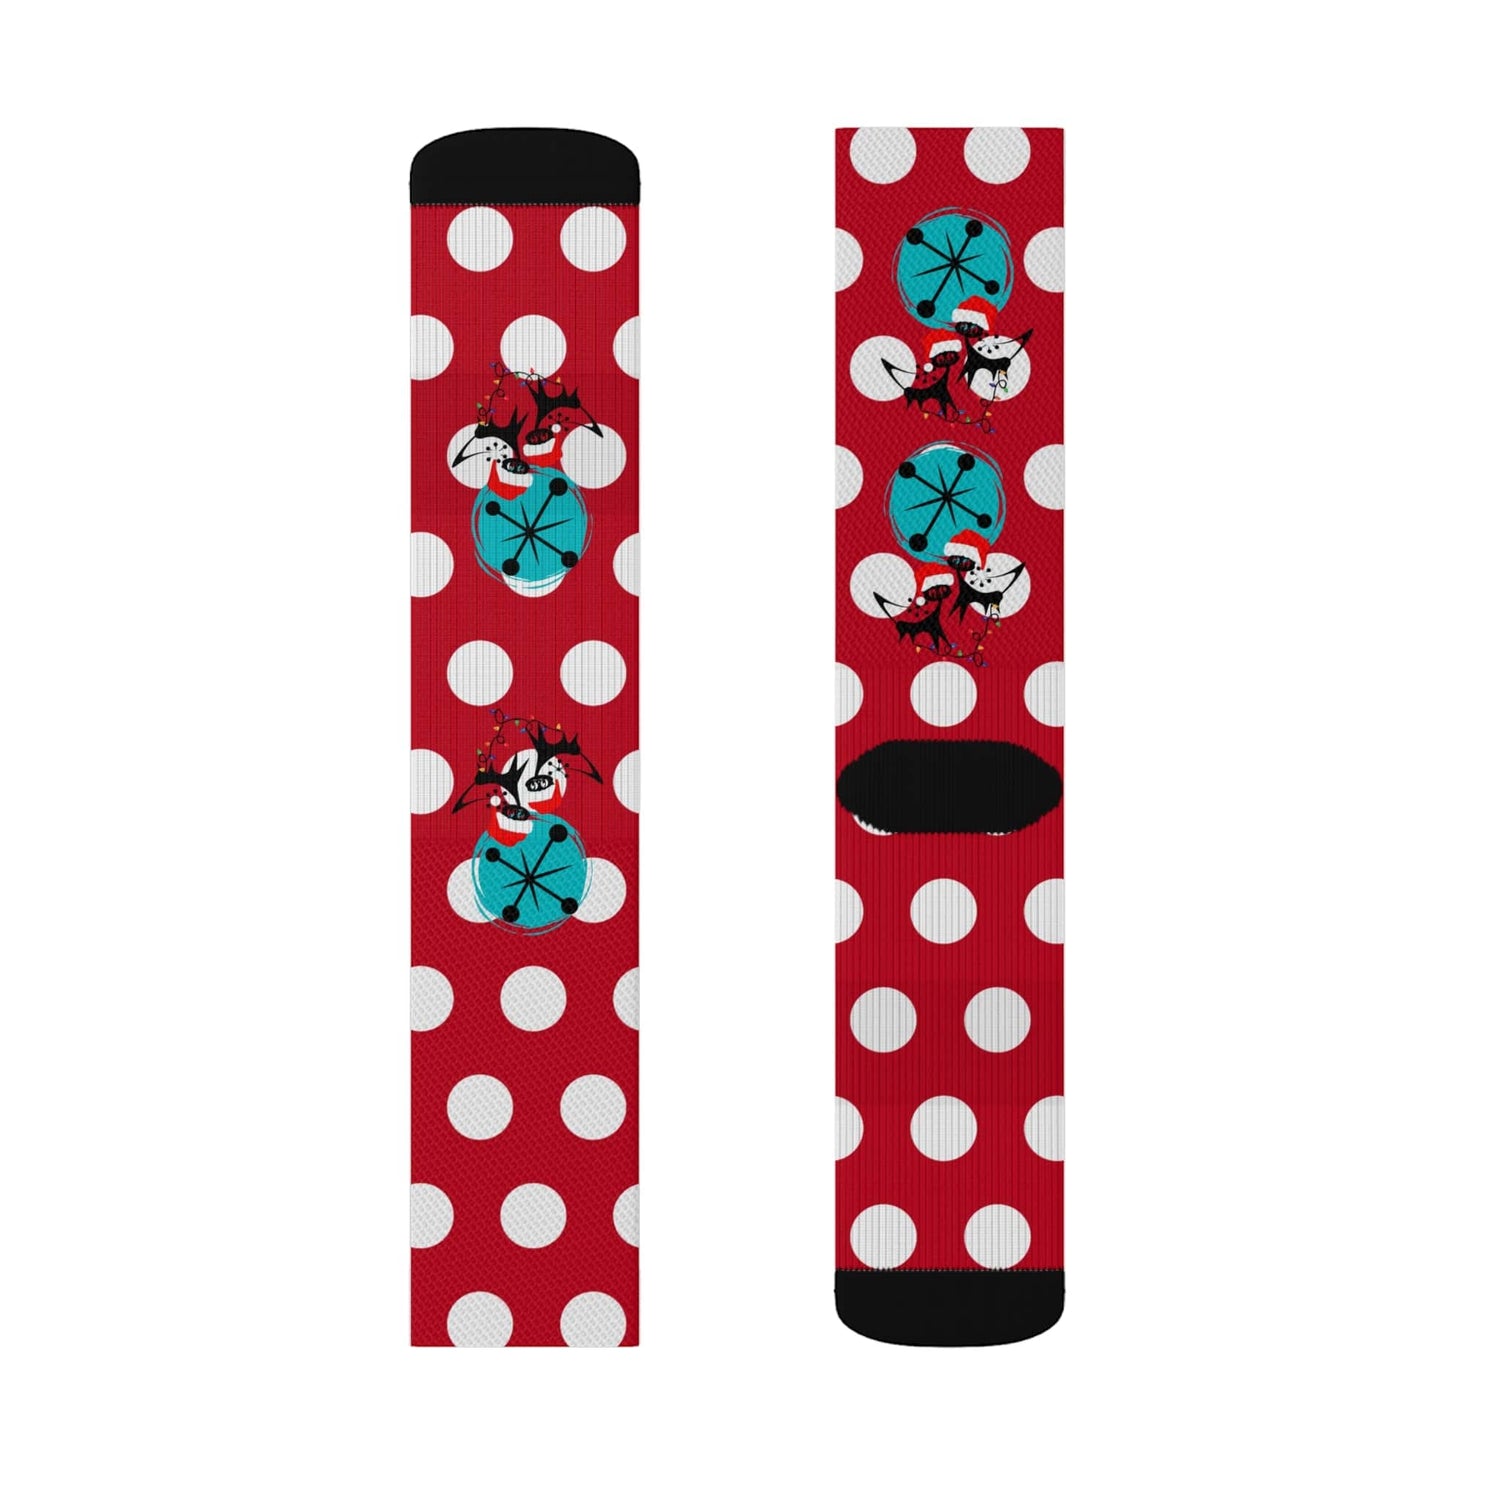 Christmas Socks, Red White, Polka Dot and Kitschy Crazy Atomic Cats  Socks All Over Prints